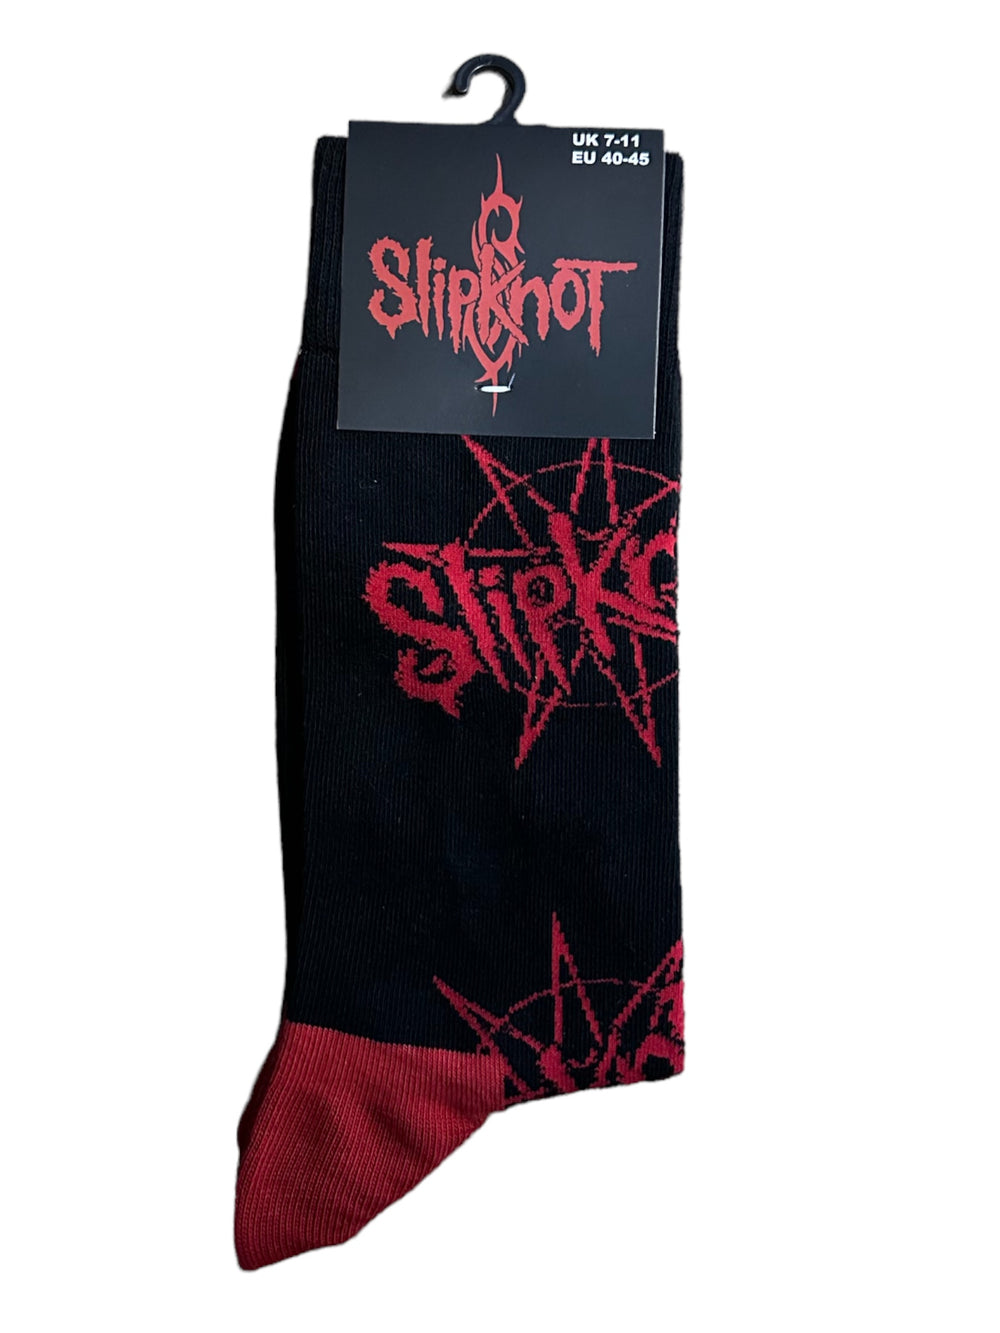 Slipknot-Logo & Nonagram BLACK Official Product 1 Pair Jacquard Socks Size 7-11 UK NEW